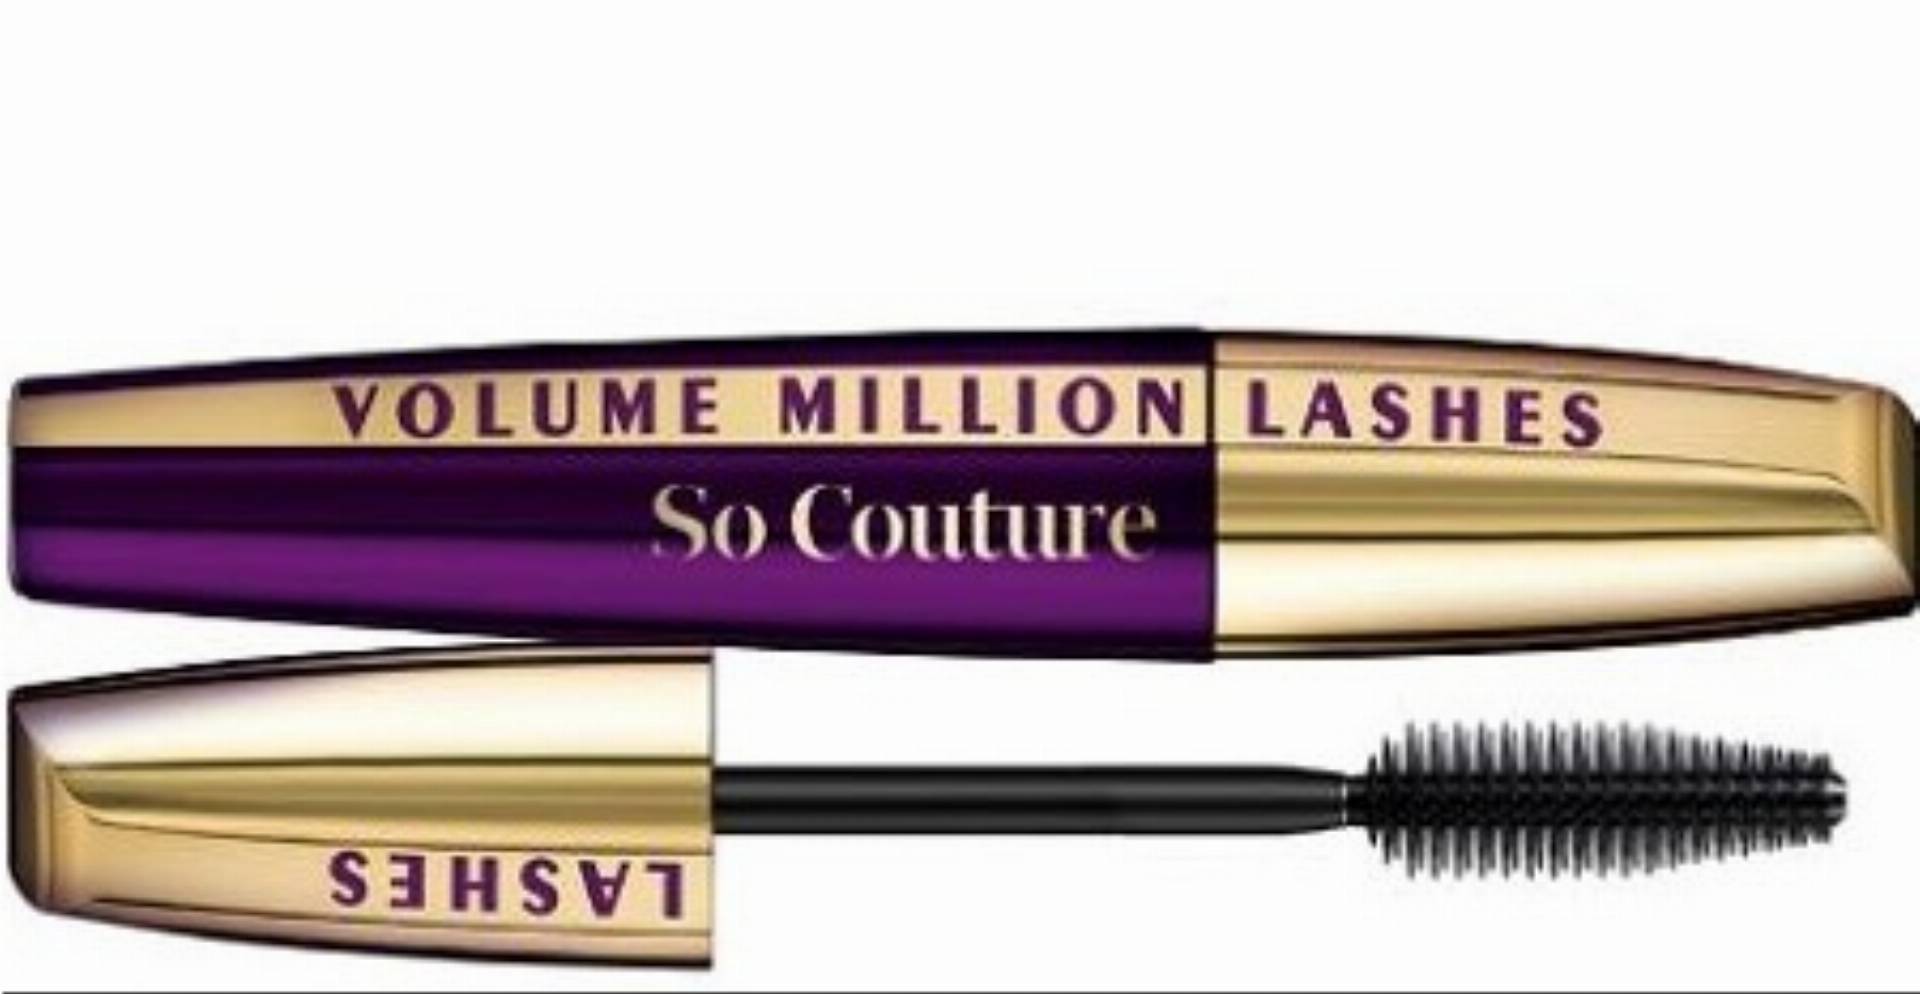 Volume million lashes so couture